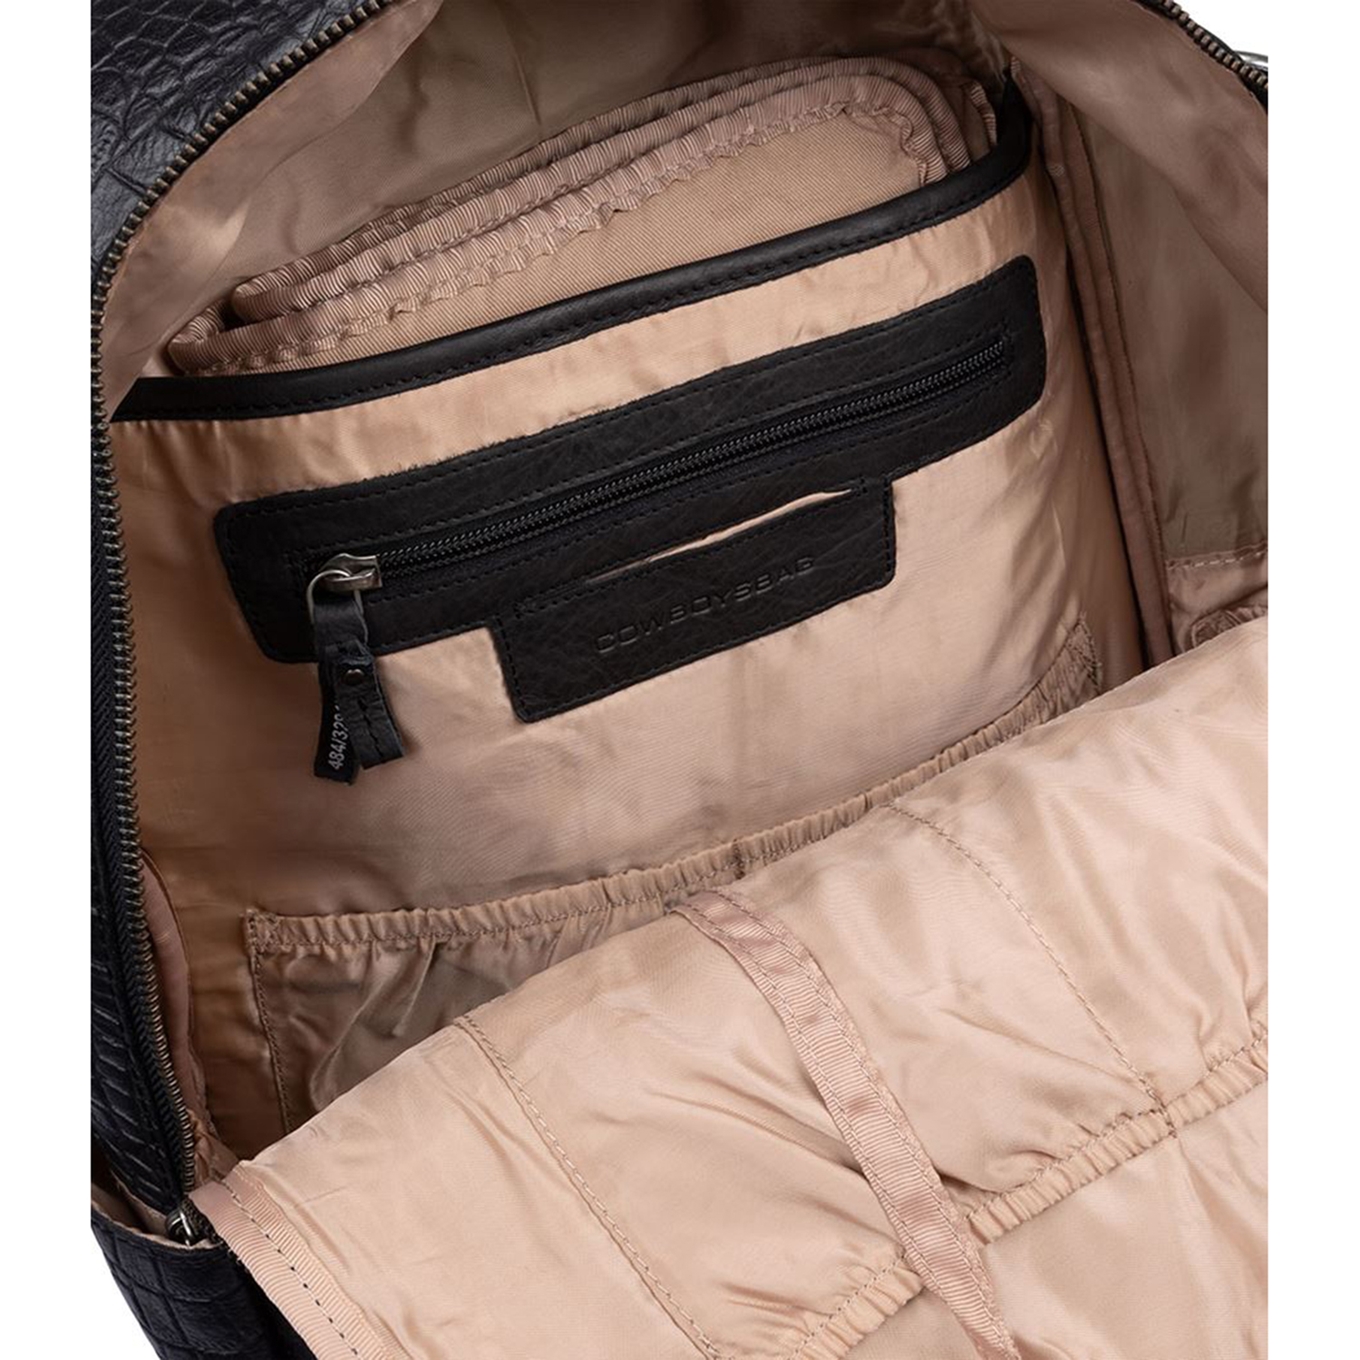 Cowboysbag Diaper Bag croco black | Travelbags.nl